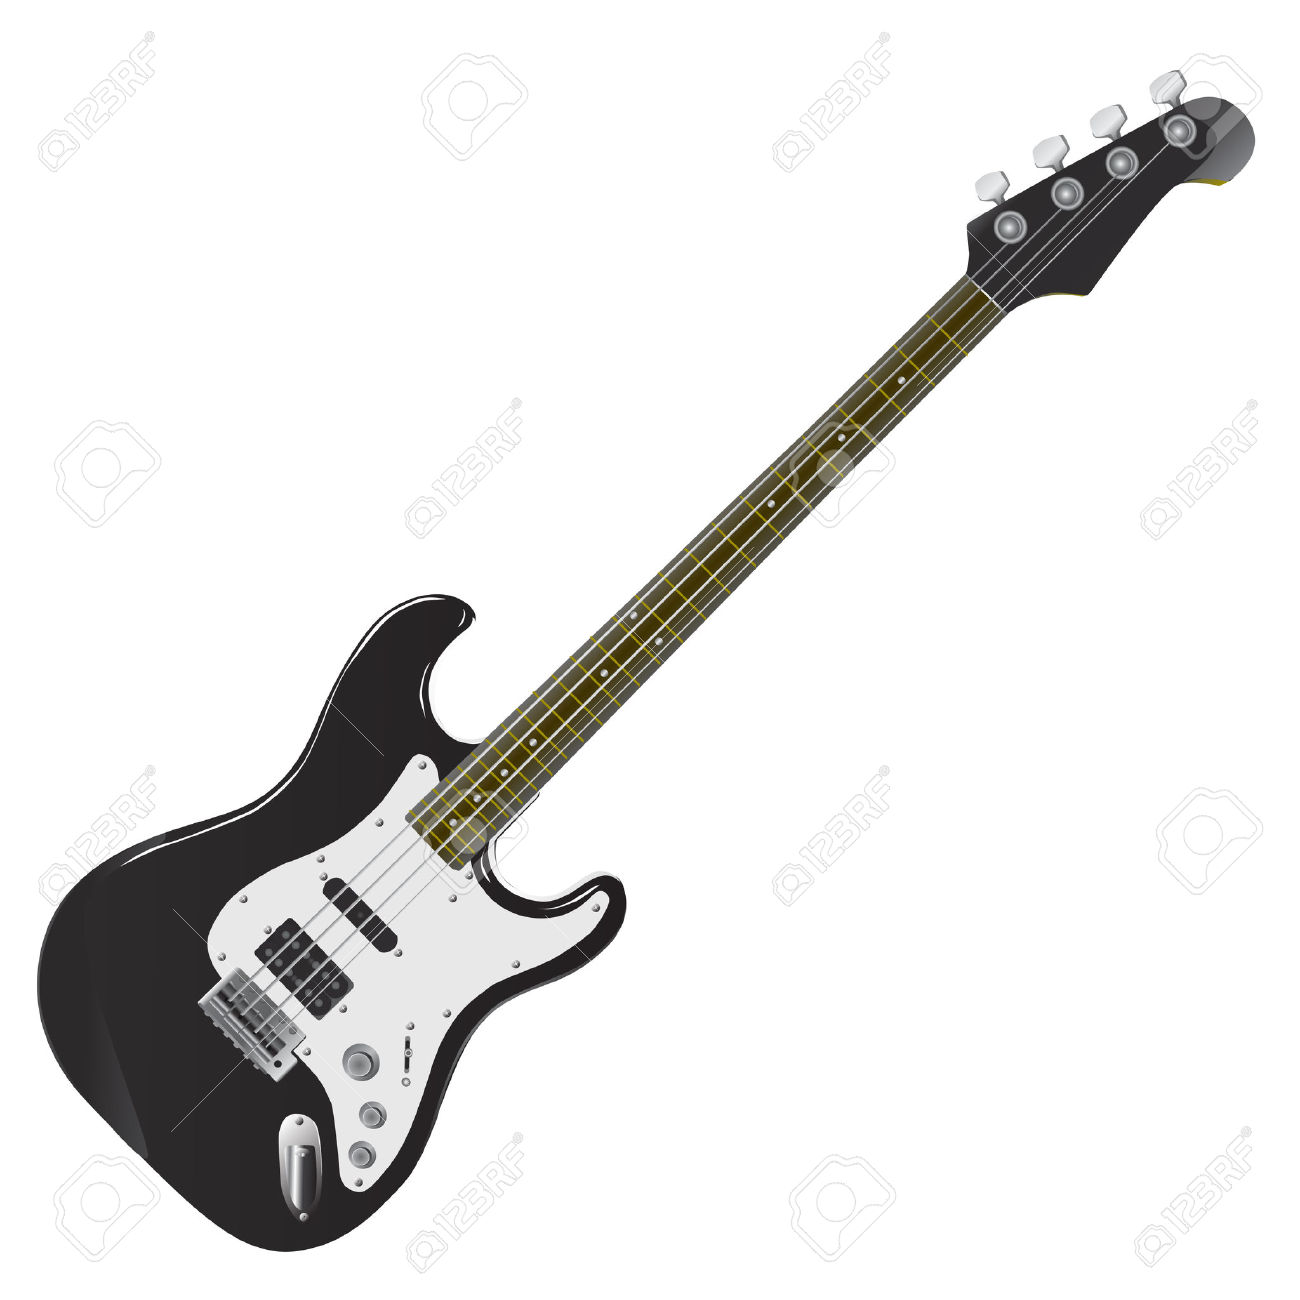 Bass Guitar Silhouette